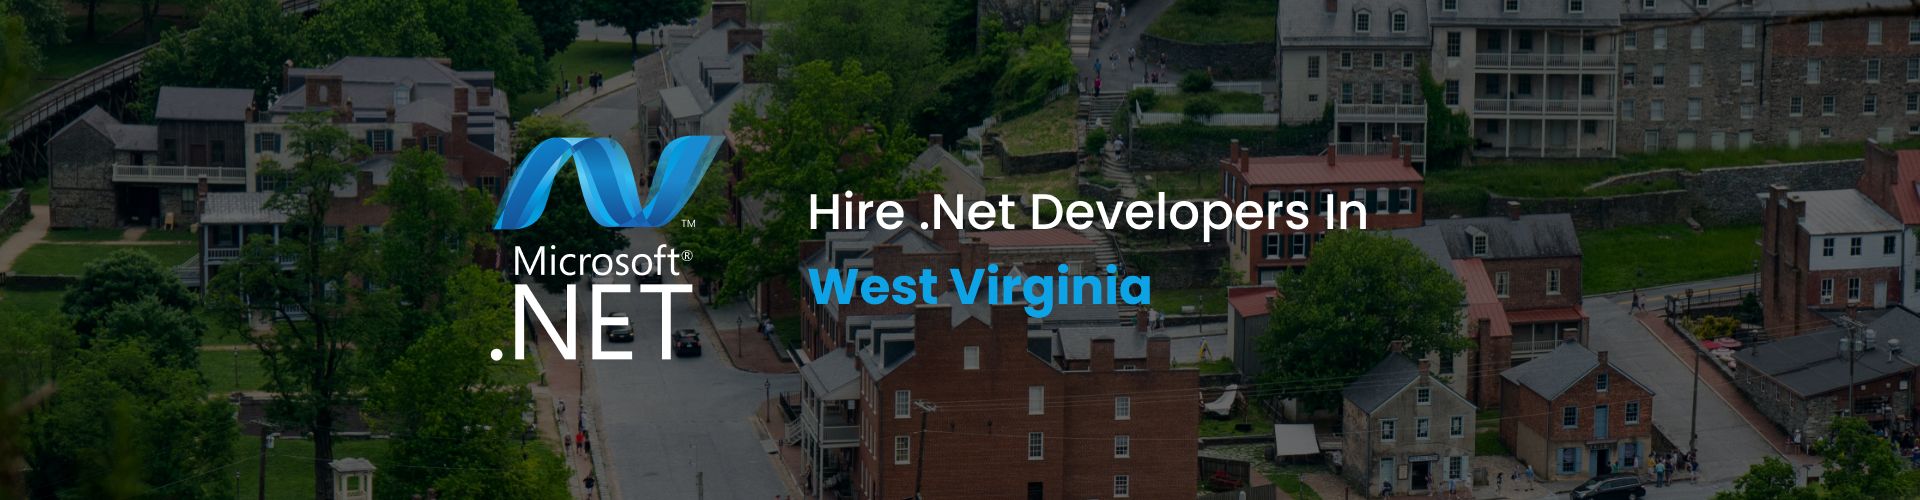 hire dot net developers in west virginia